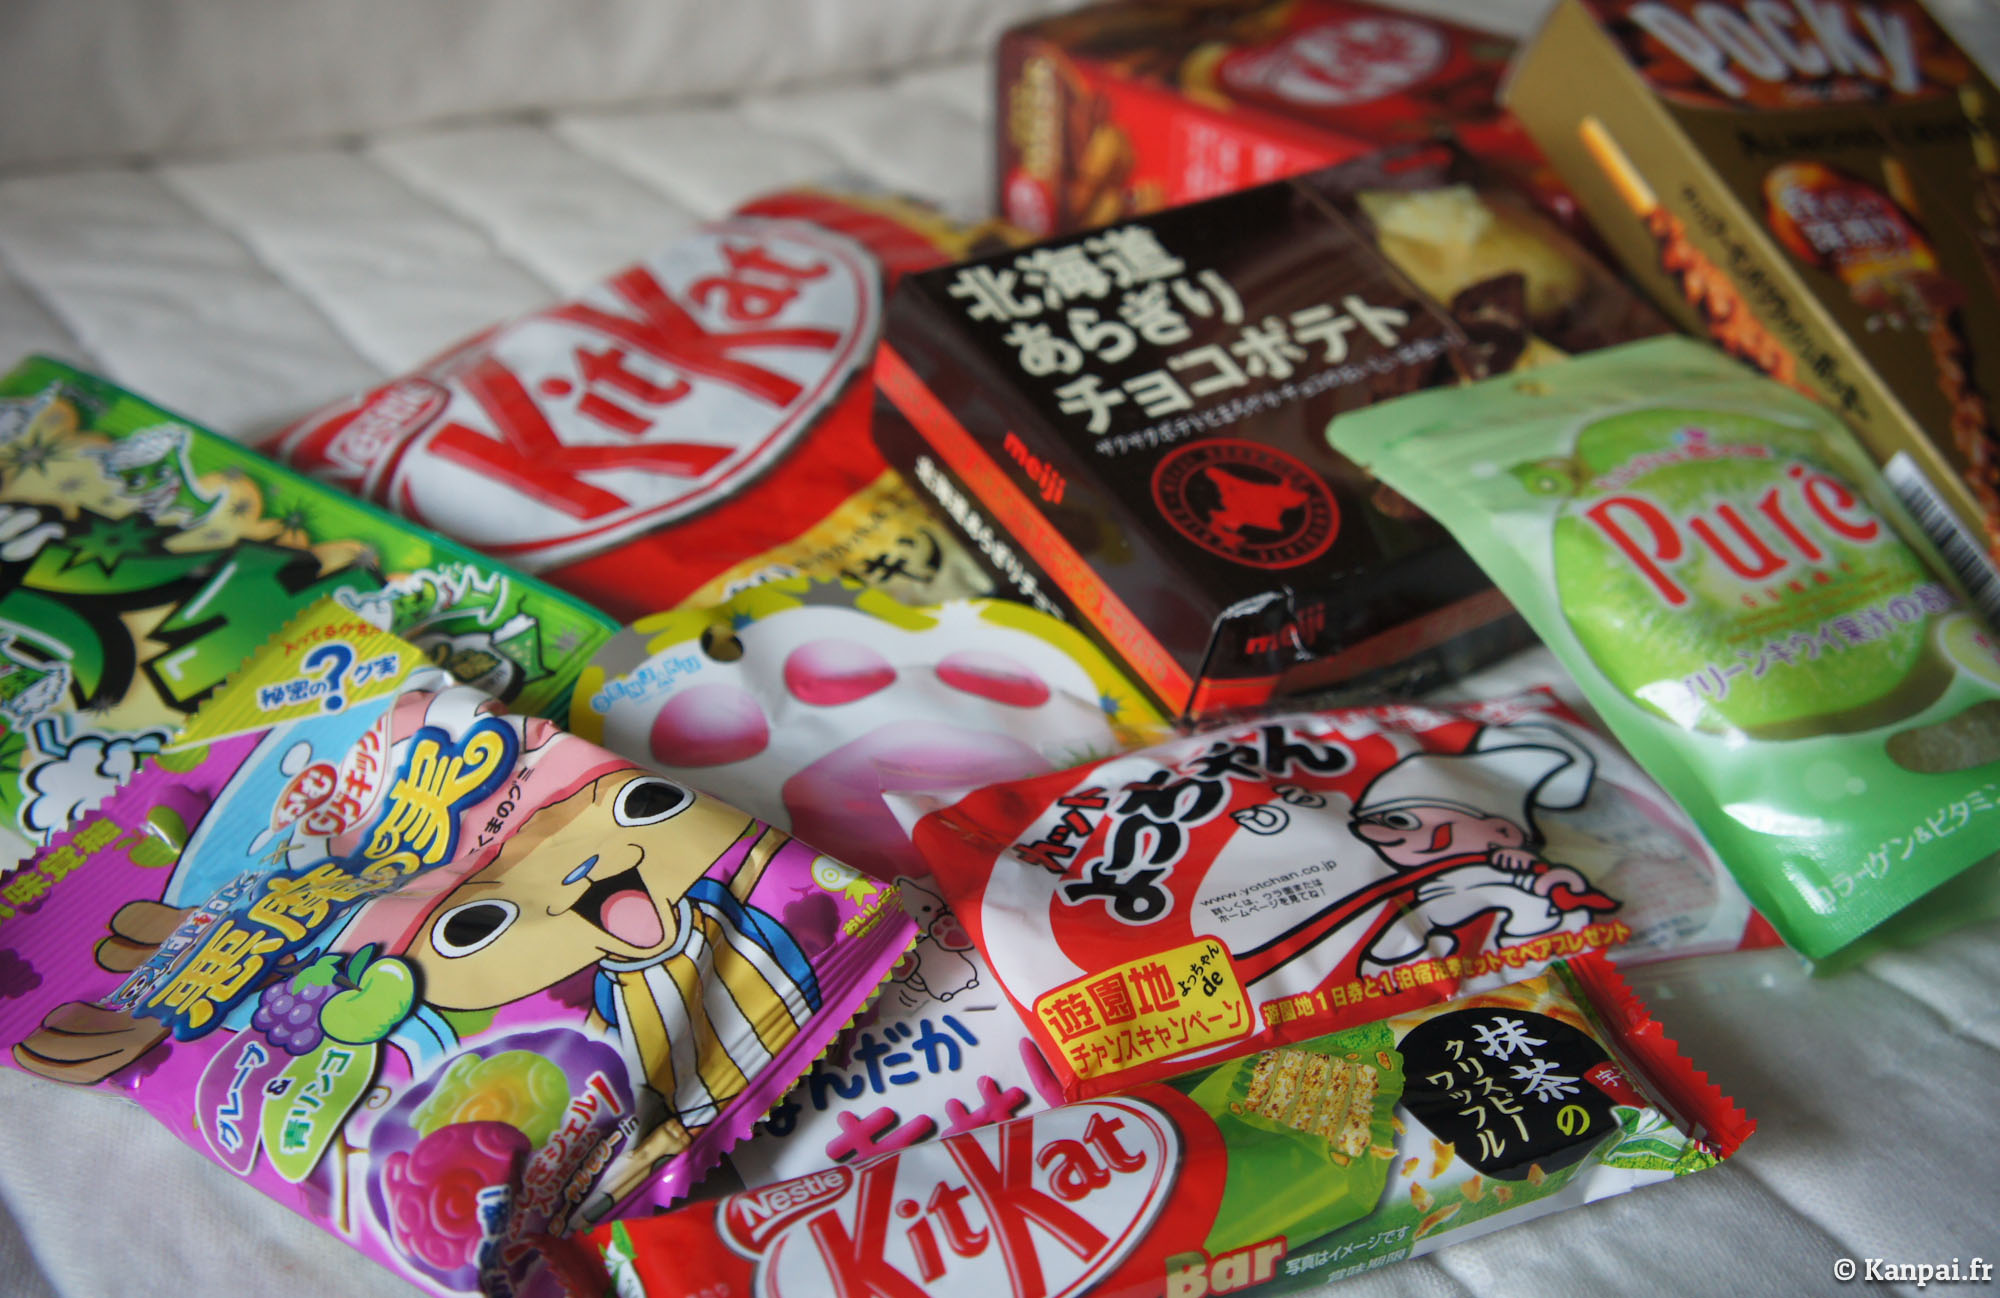 https://www.kanpai.fr/sites/default/files/uploads/2012/11/candysan-bonbons-japonais.jpg